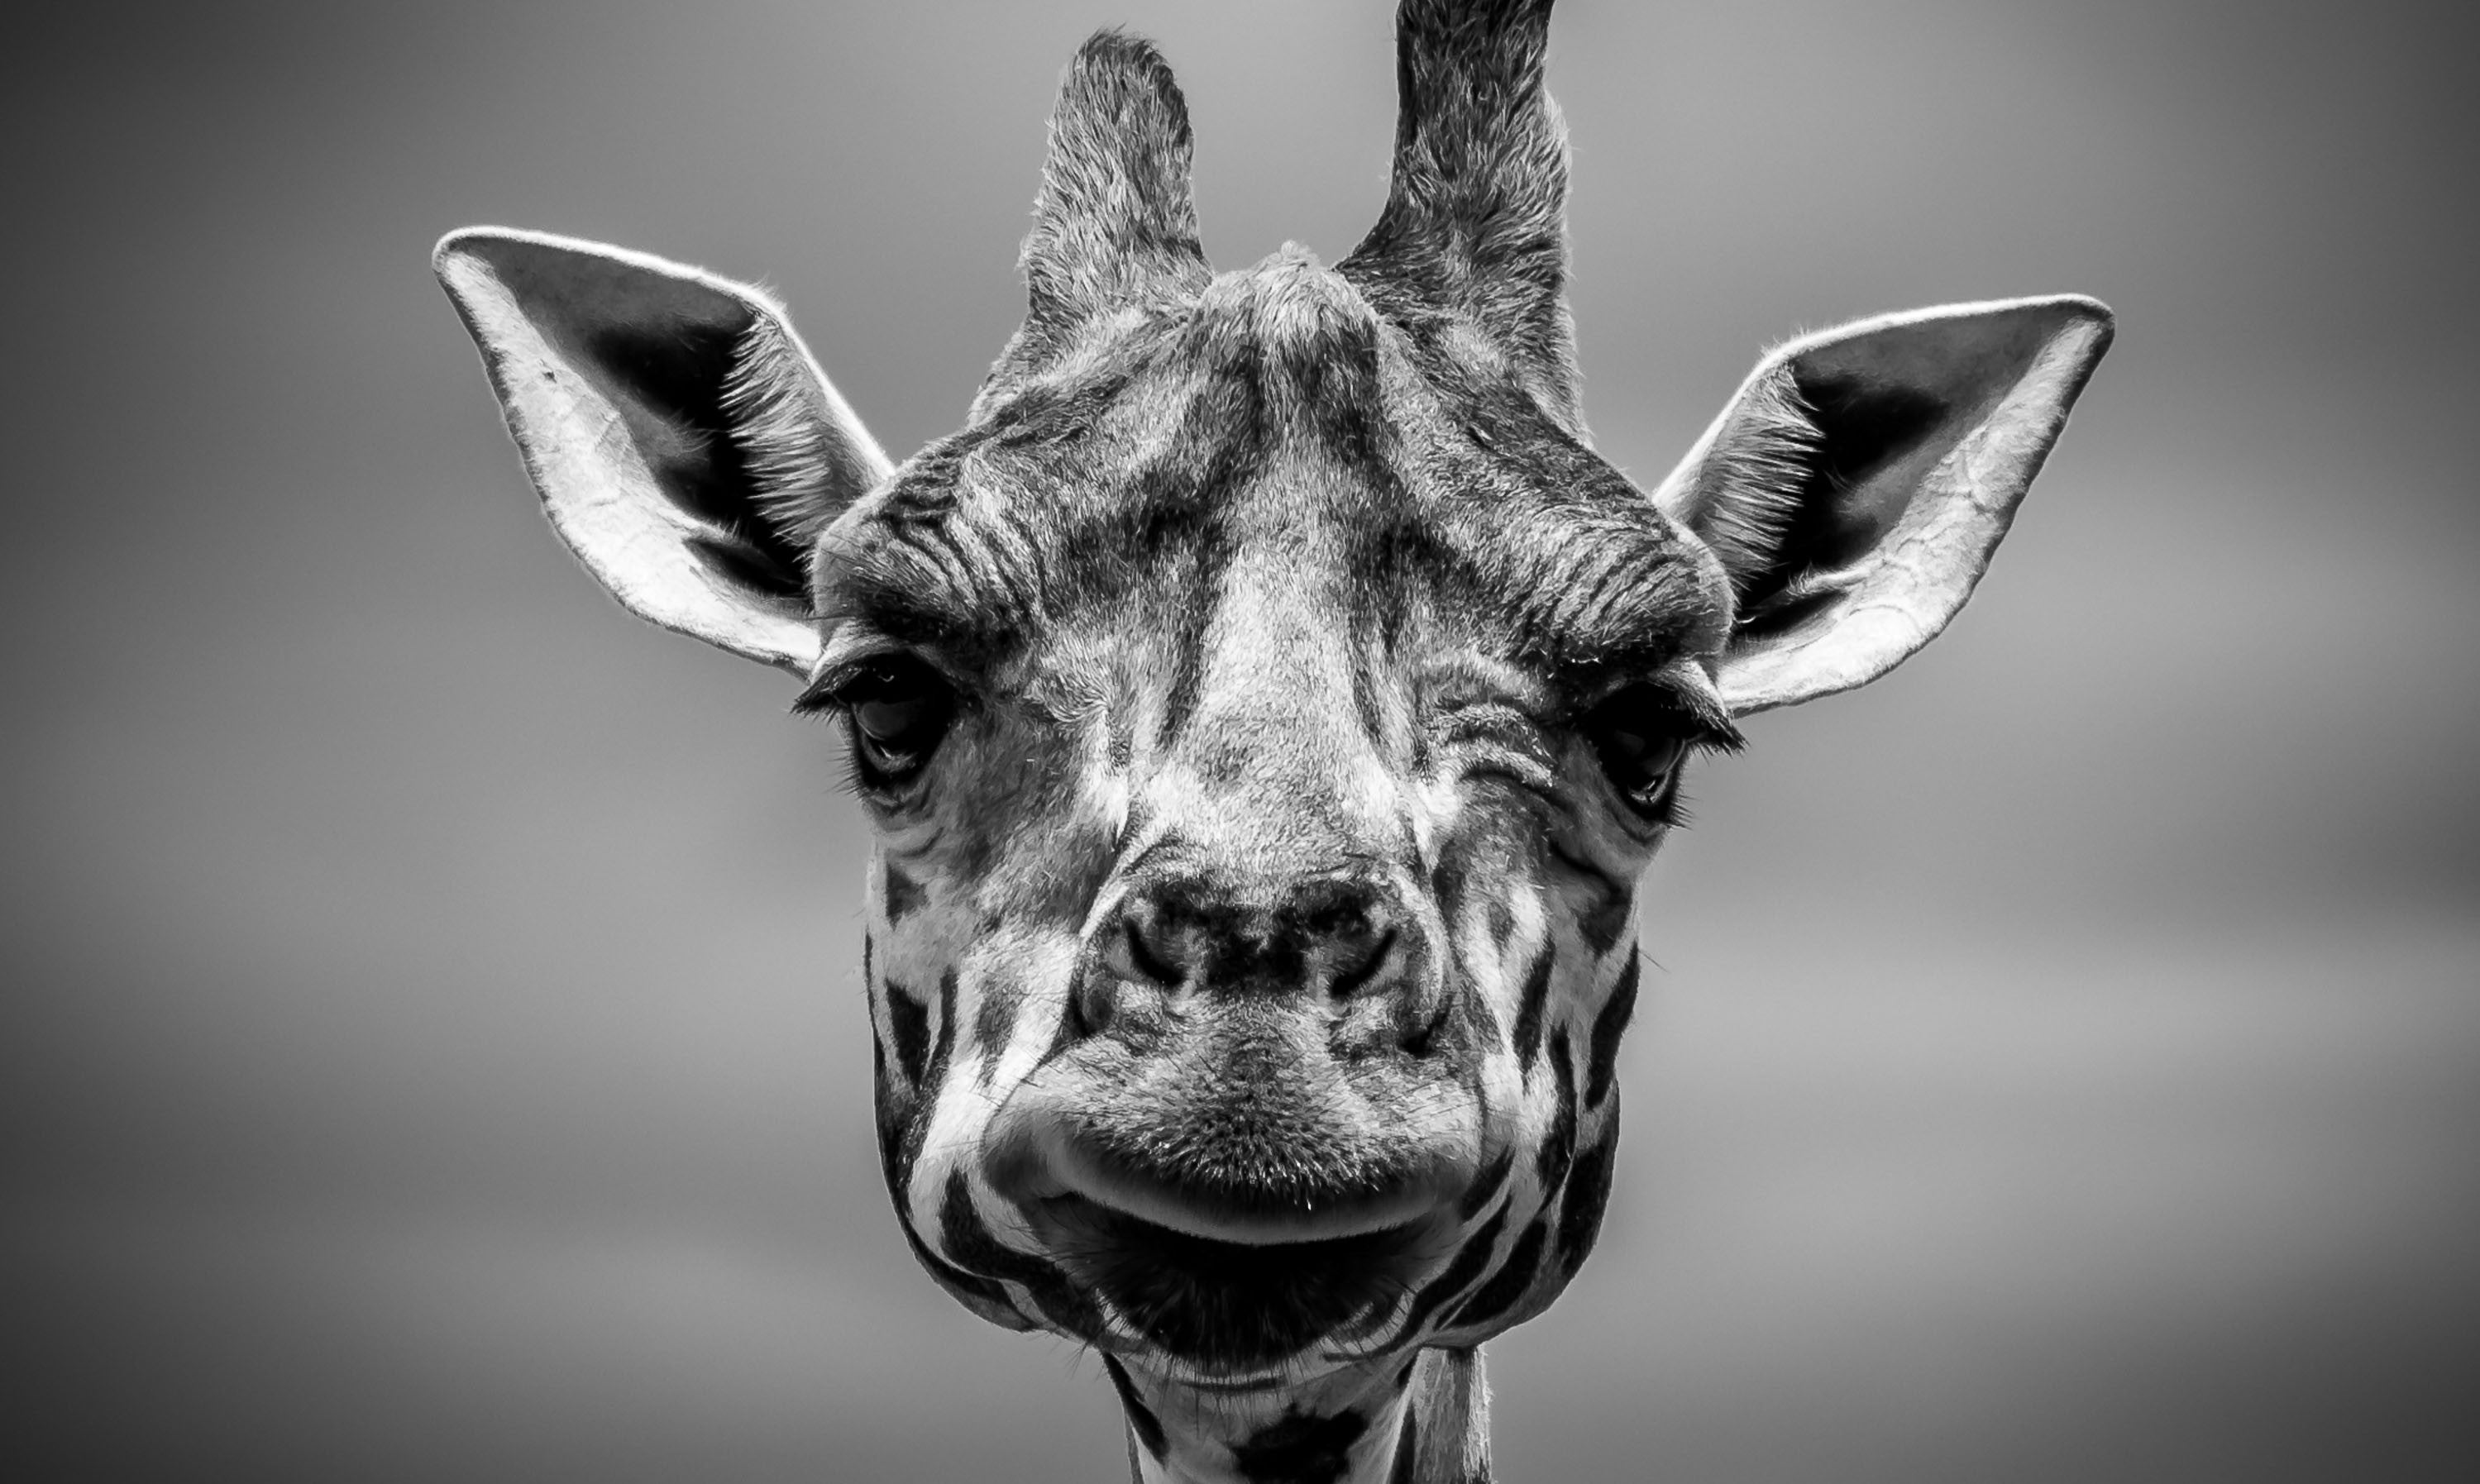 Black and white giraffe close up